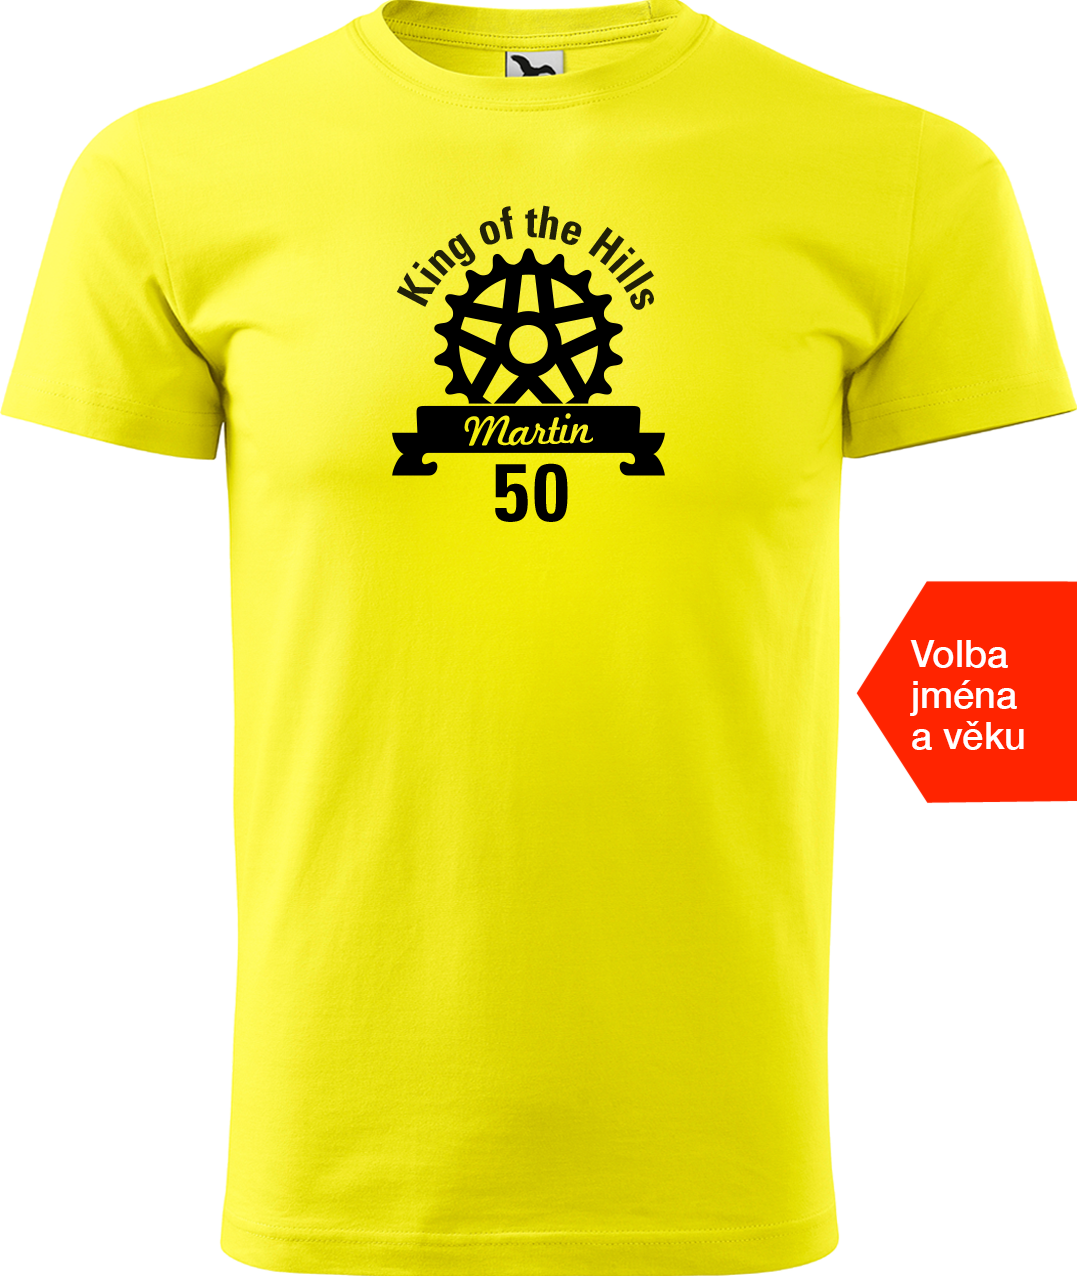 Pánské tričko pro cyklistu se jménem - King of the Hills Velikost: 3XL, Barva: Žlutá (04)